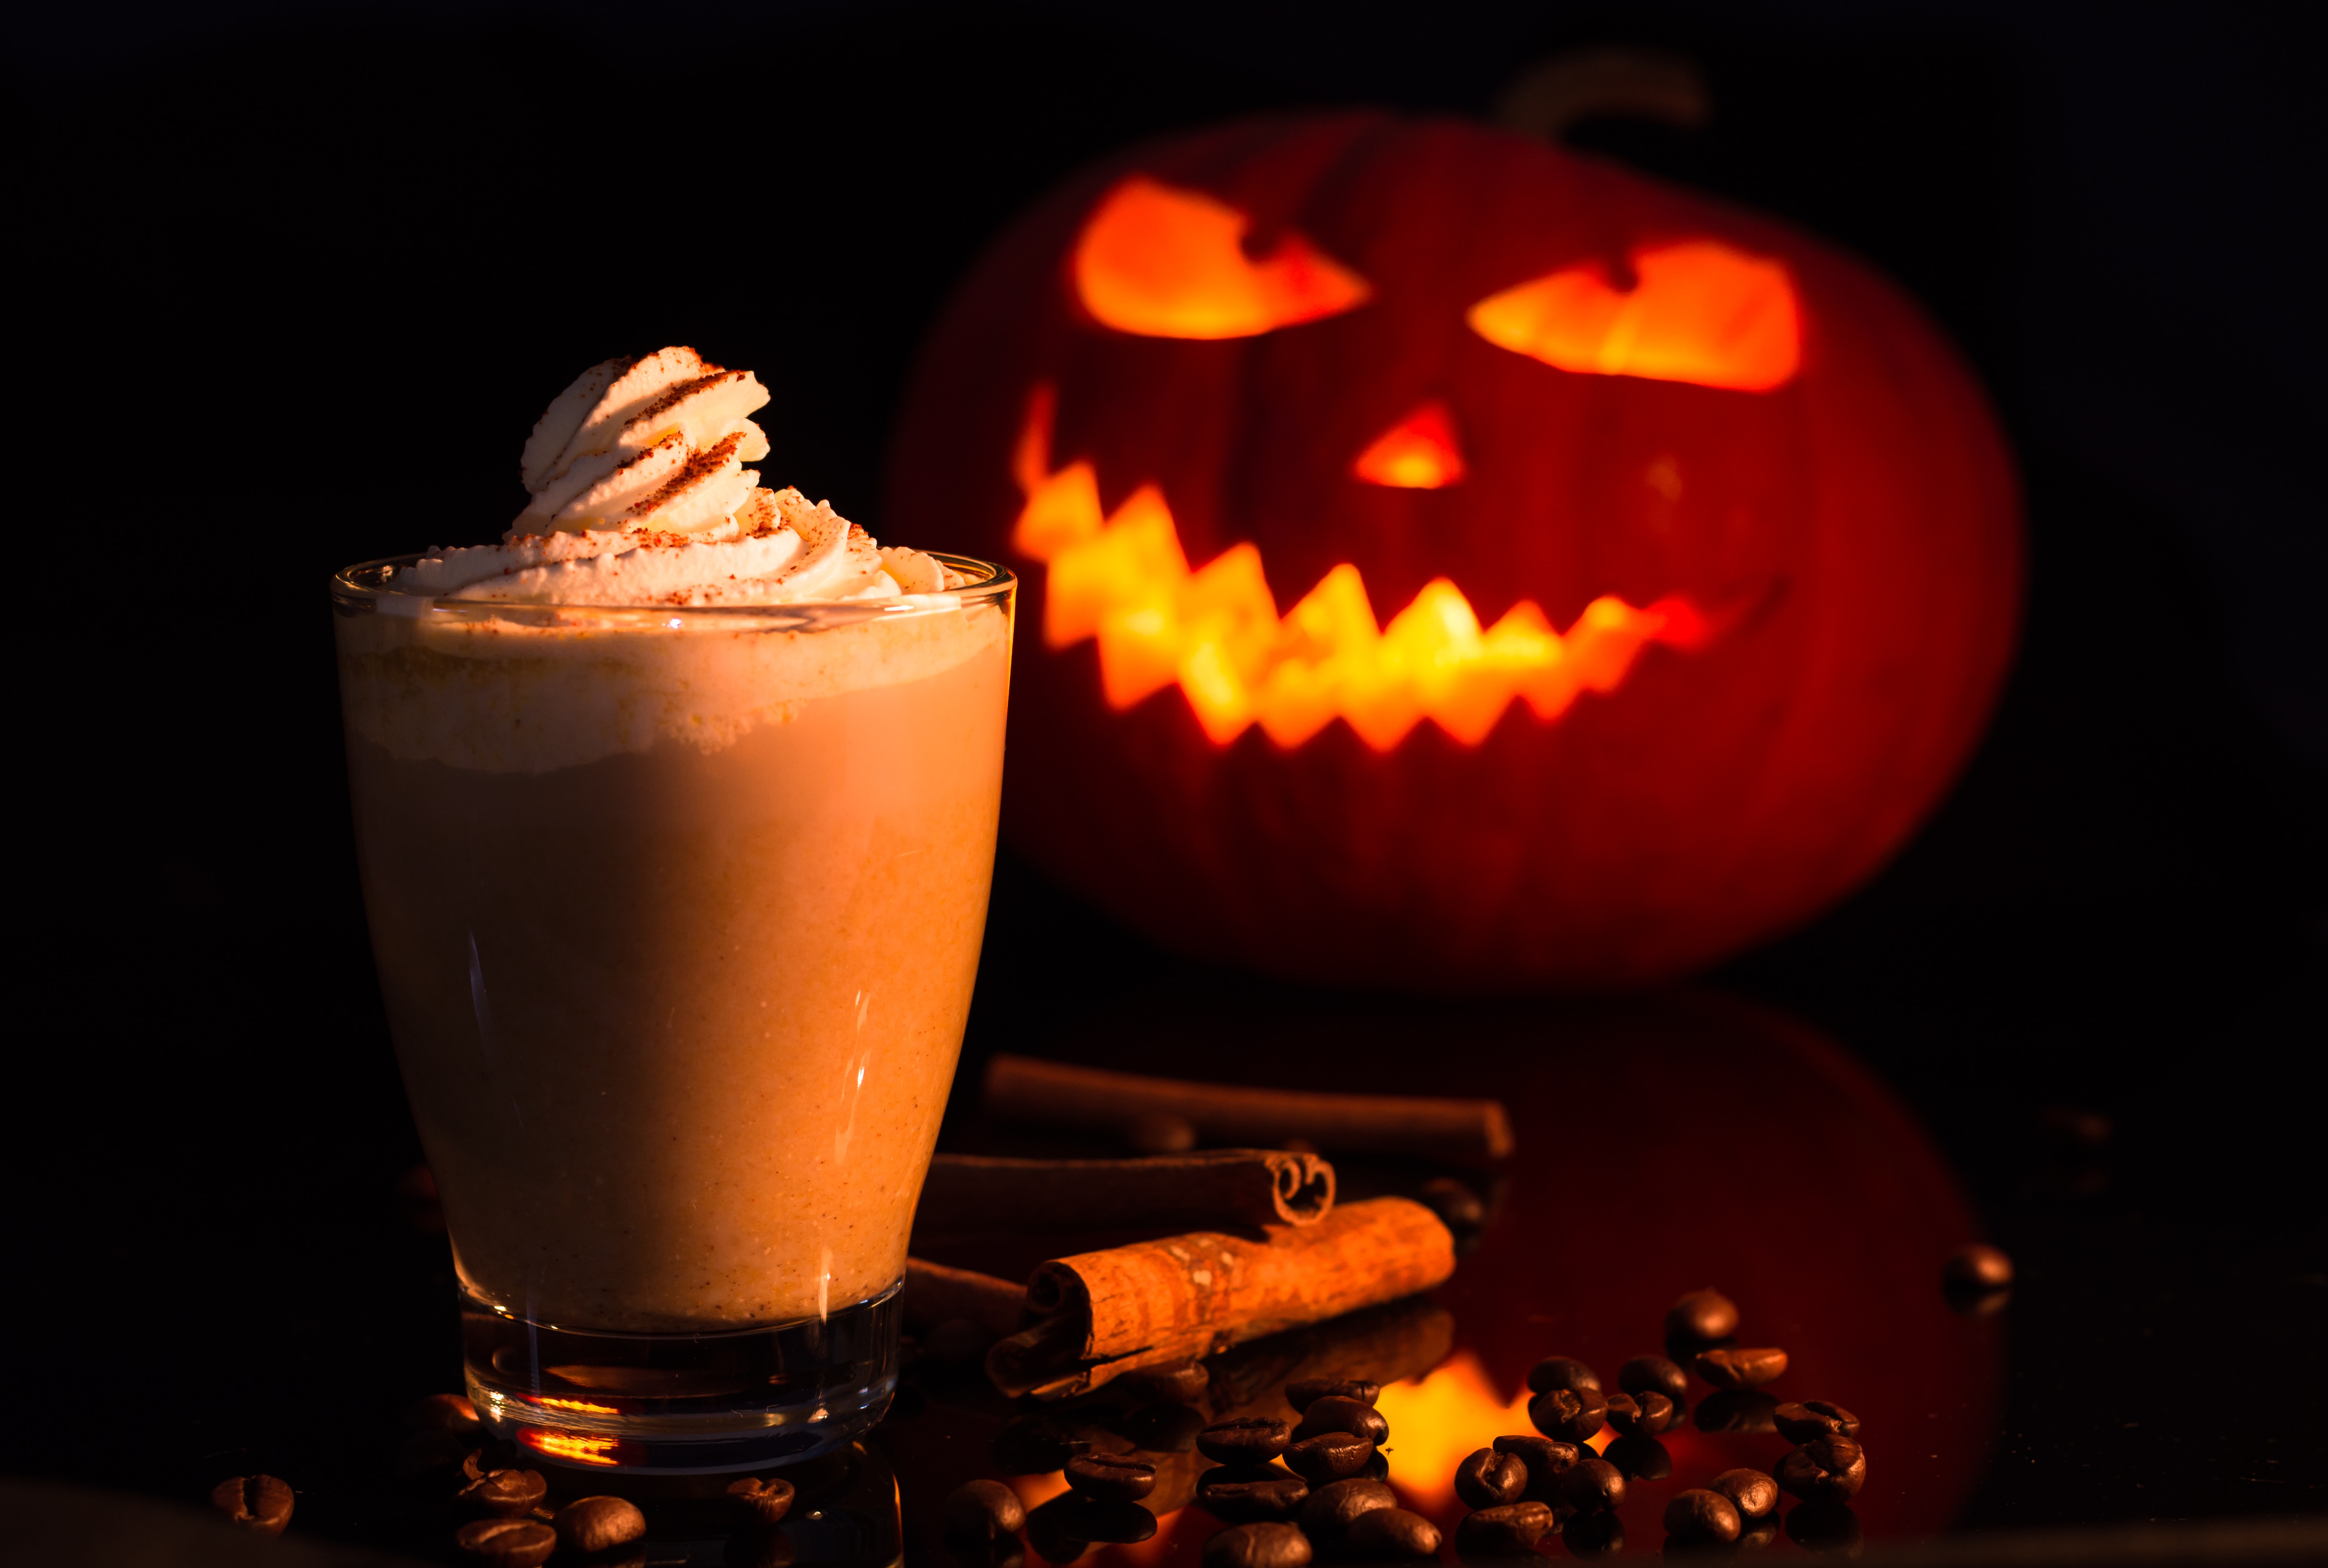 Halloween pumpkin spice latte drink with a lit orange carved pumpkin at the background